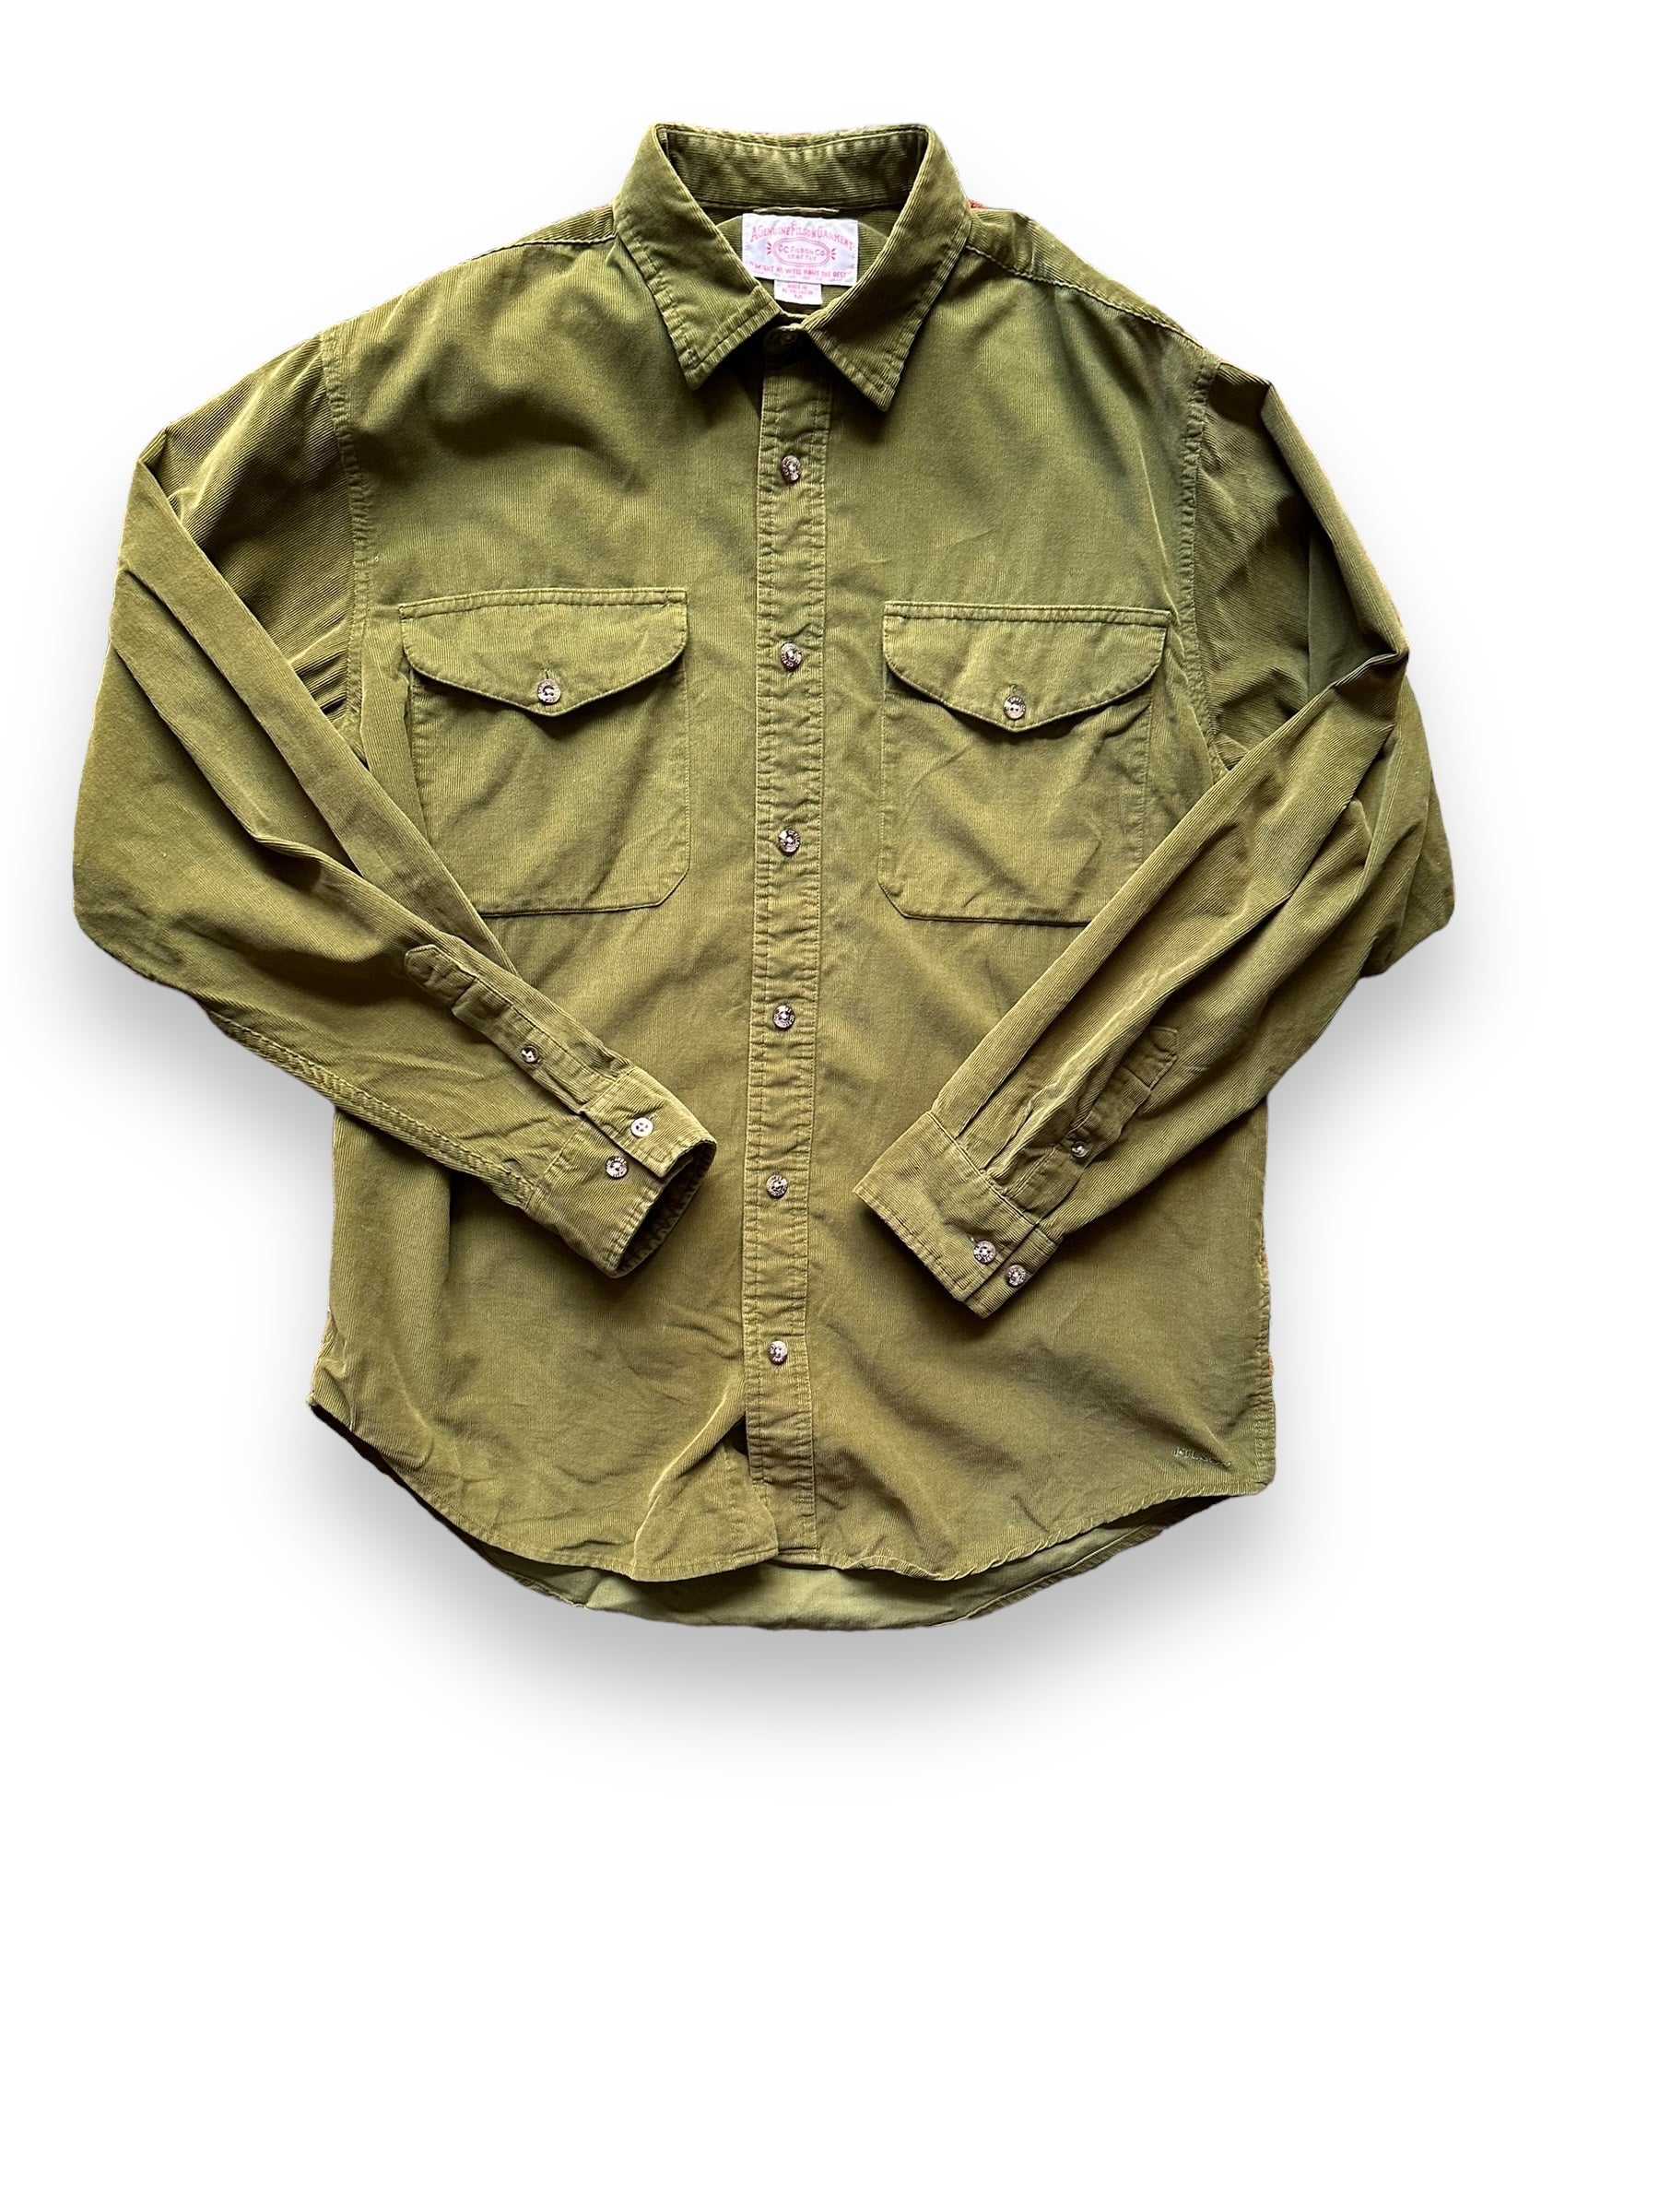 Front View of Filson Green Corduroy Shirt SZ M |  Barn Owl Vintage Goods Seattle | Filson Bargain Outlet